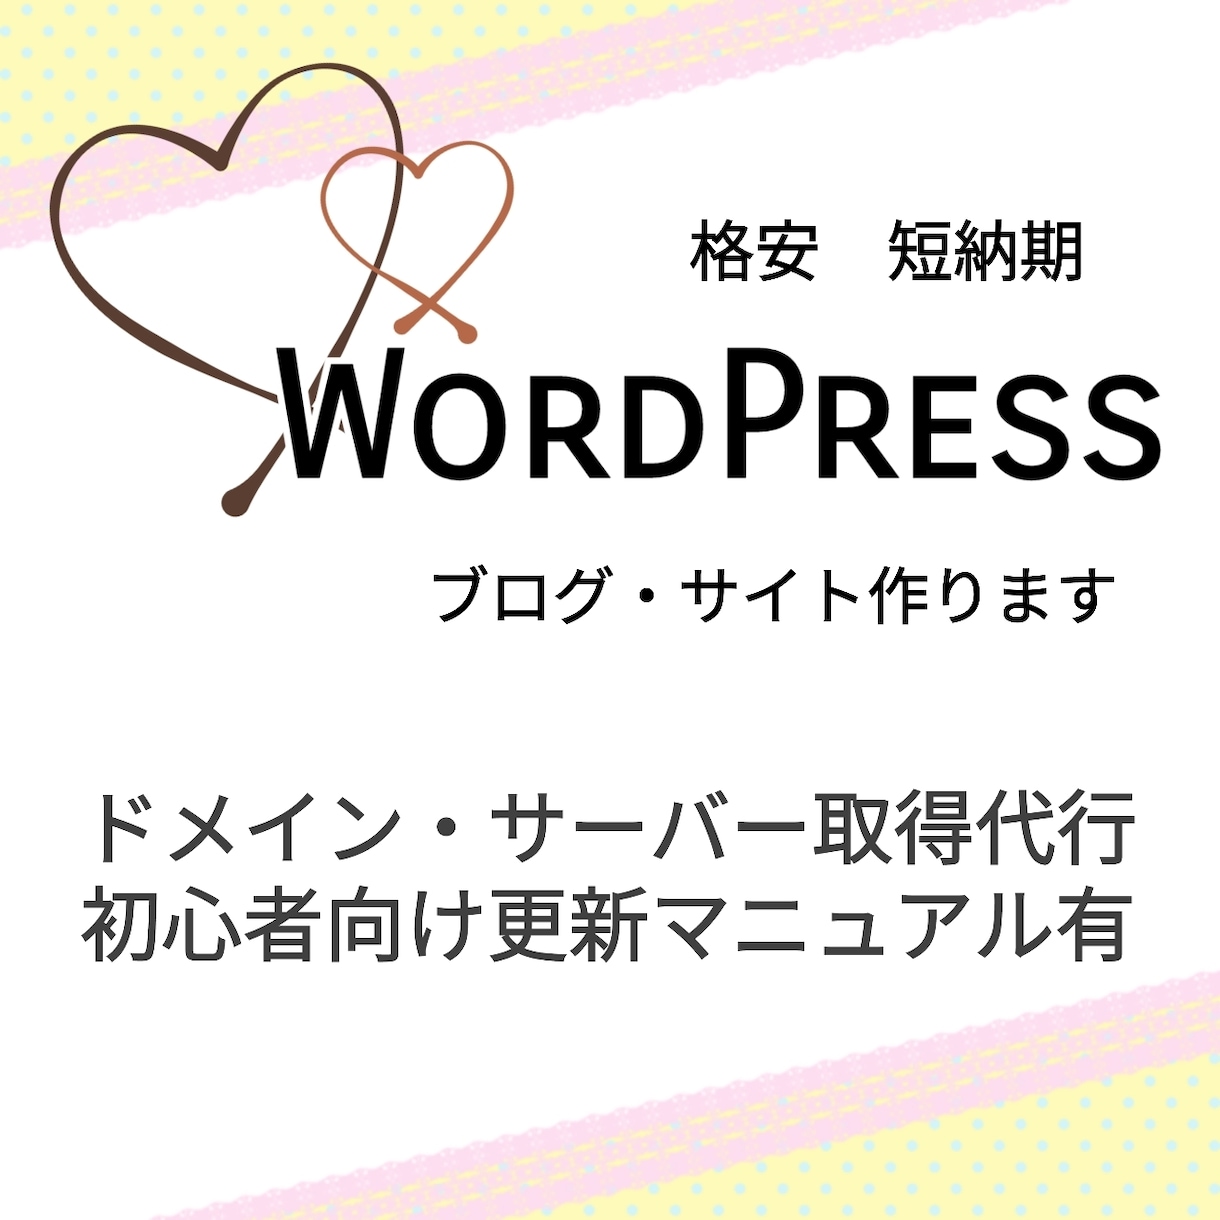 WordPress特価10,000円で承ります 初出品特価でWordPressをご用意します！マニュアル有 イメージ1